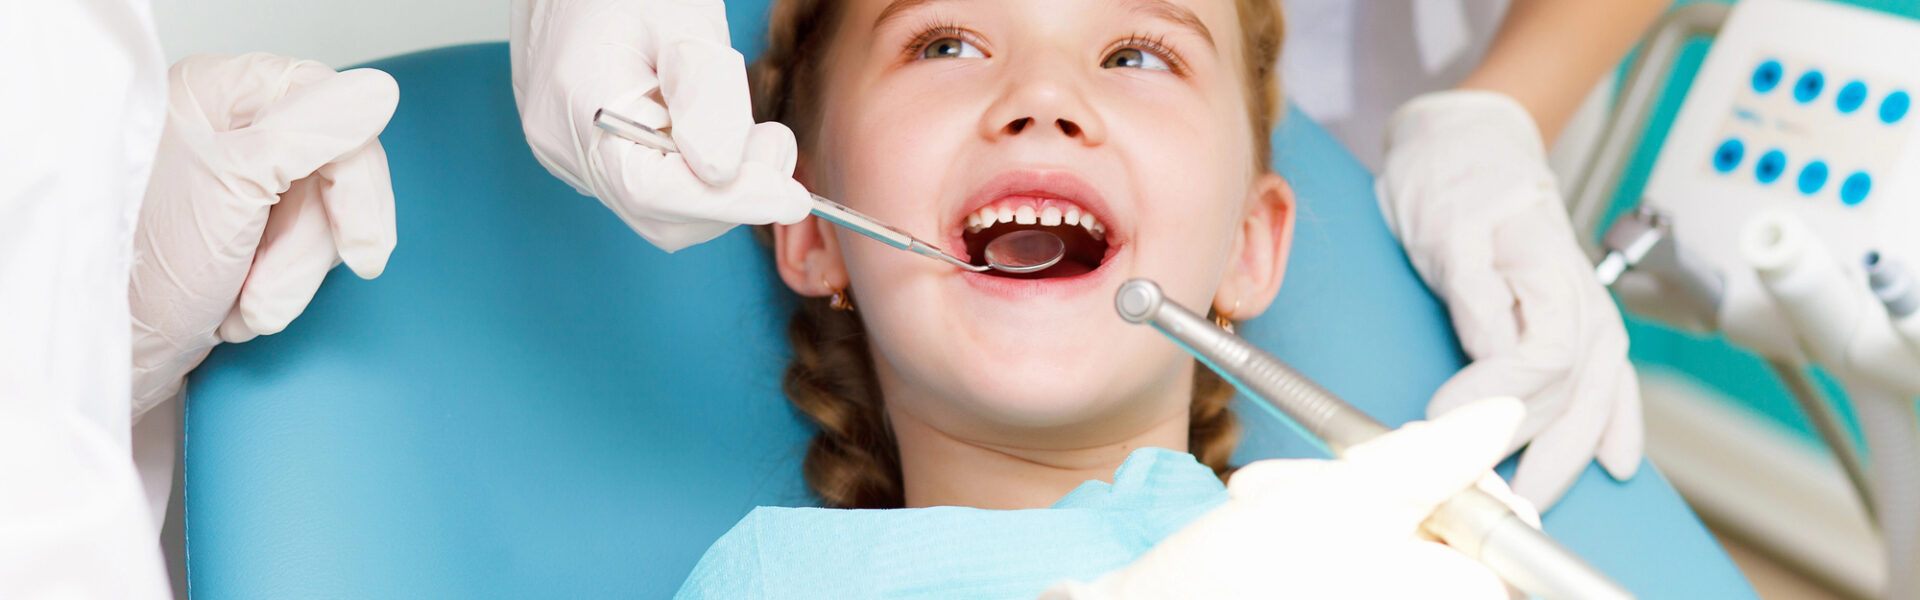 Oral Health Care for Children